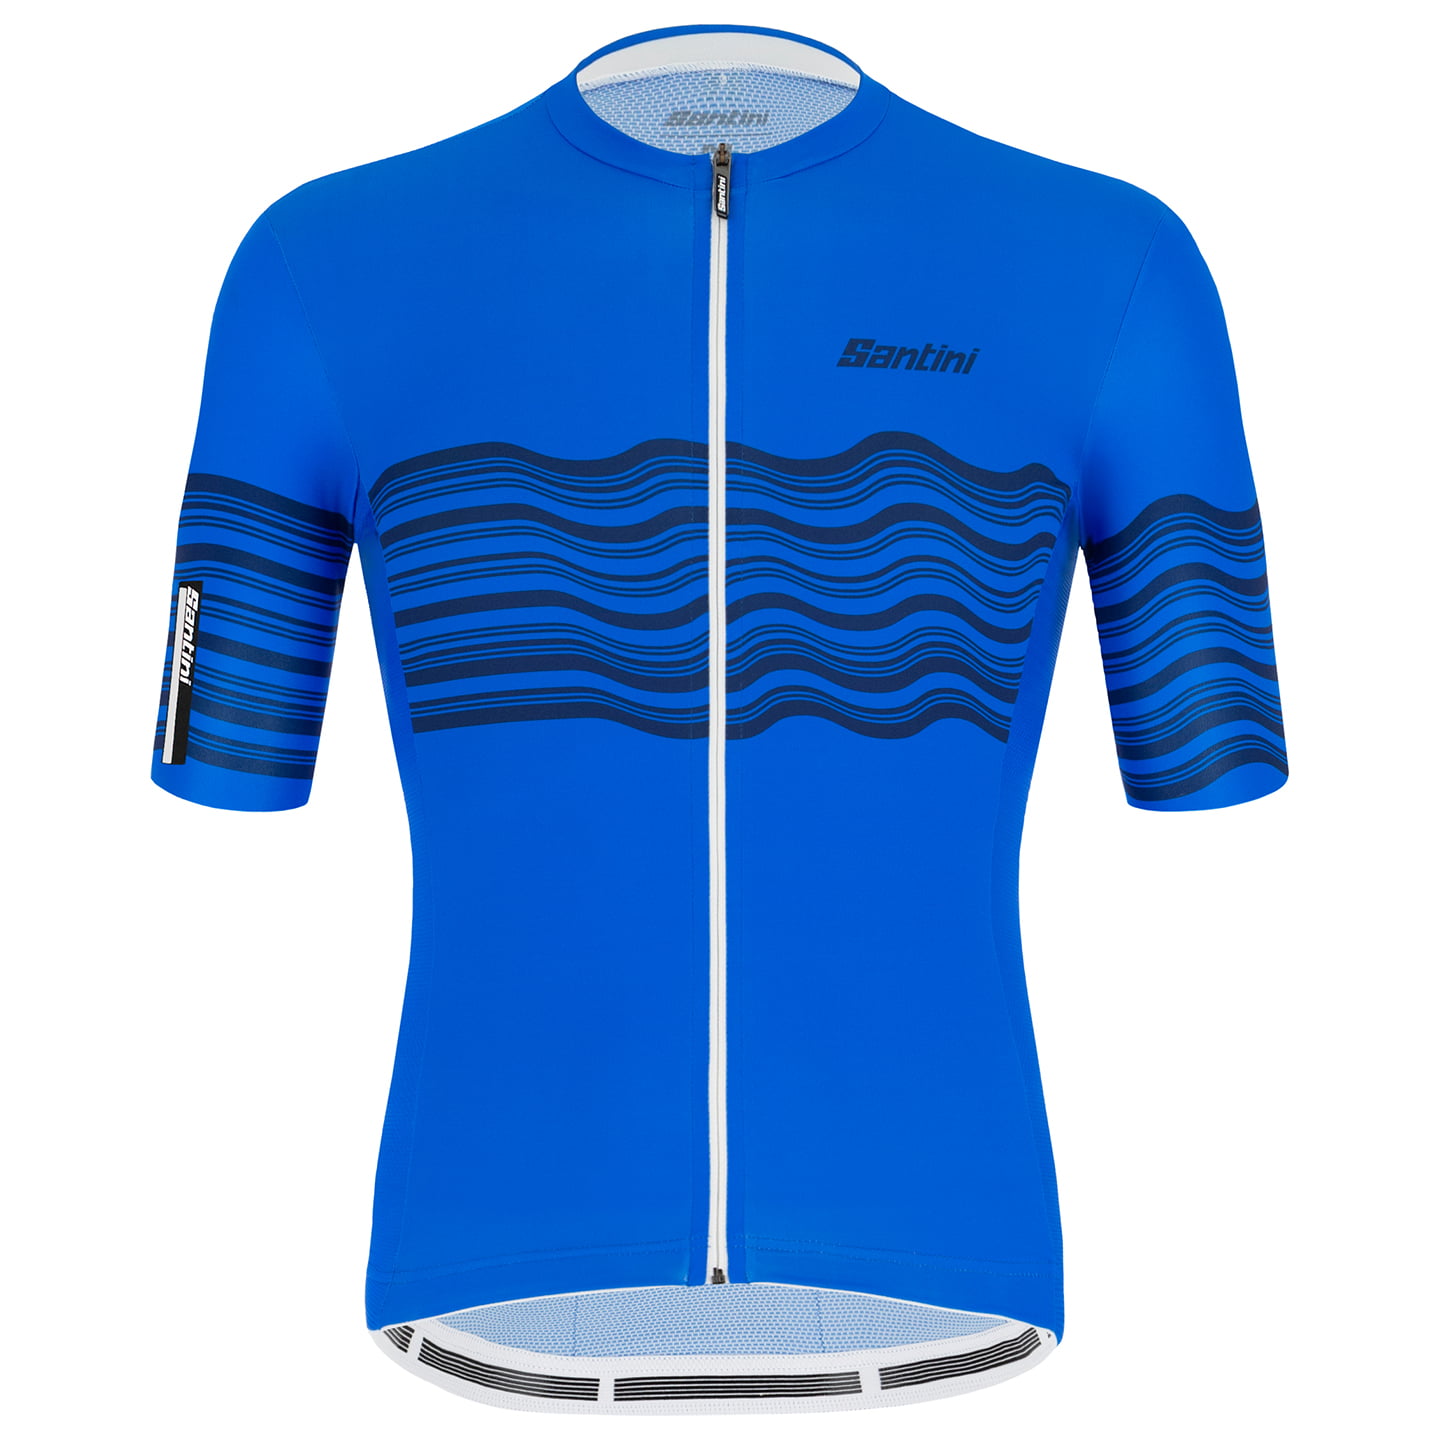 SANTINI Tono Profilo Short Sleeve Jersey Short Sleeve Jersey, for men, size XL, Cycling jersey, Cycle clothing